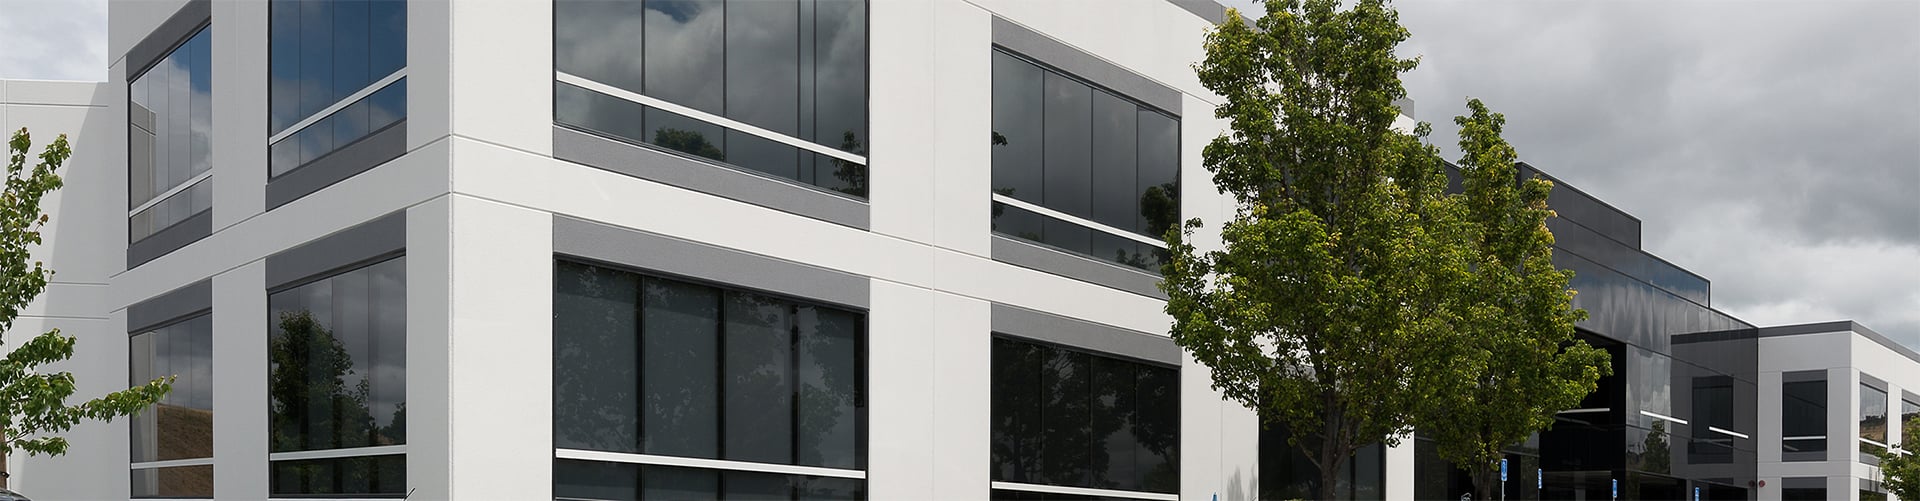 Lynx Software Technologies Headquarters in San Jose, CA